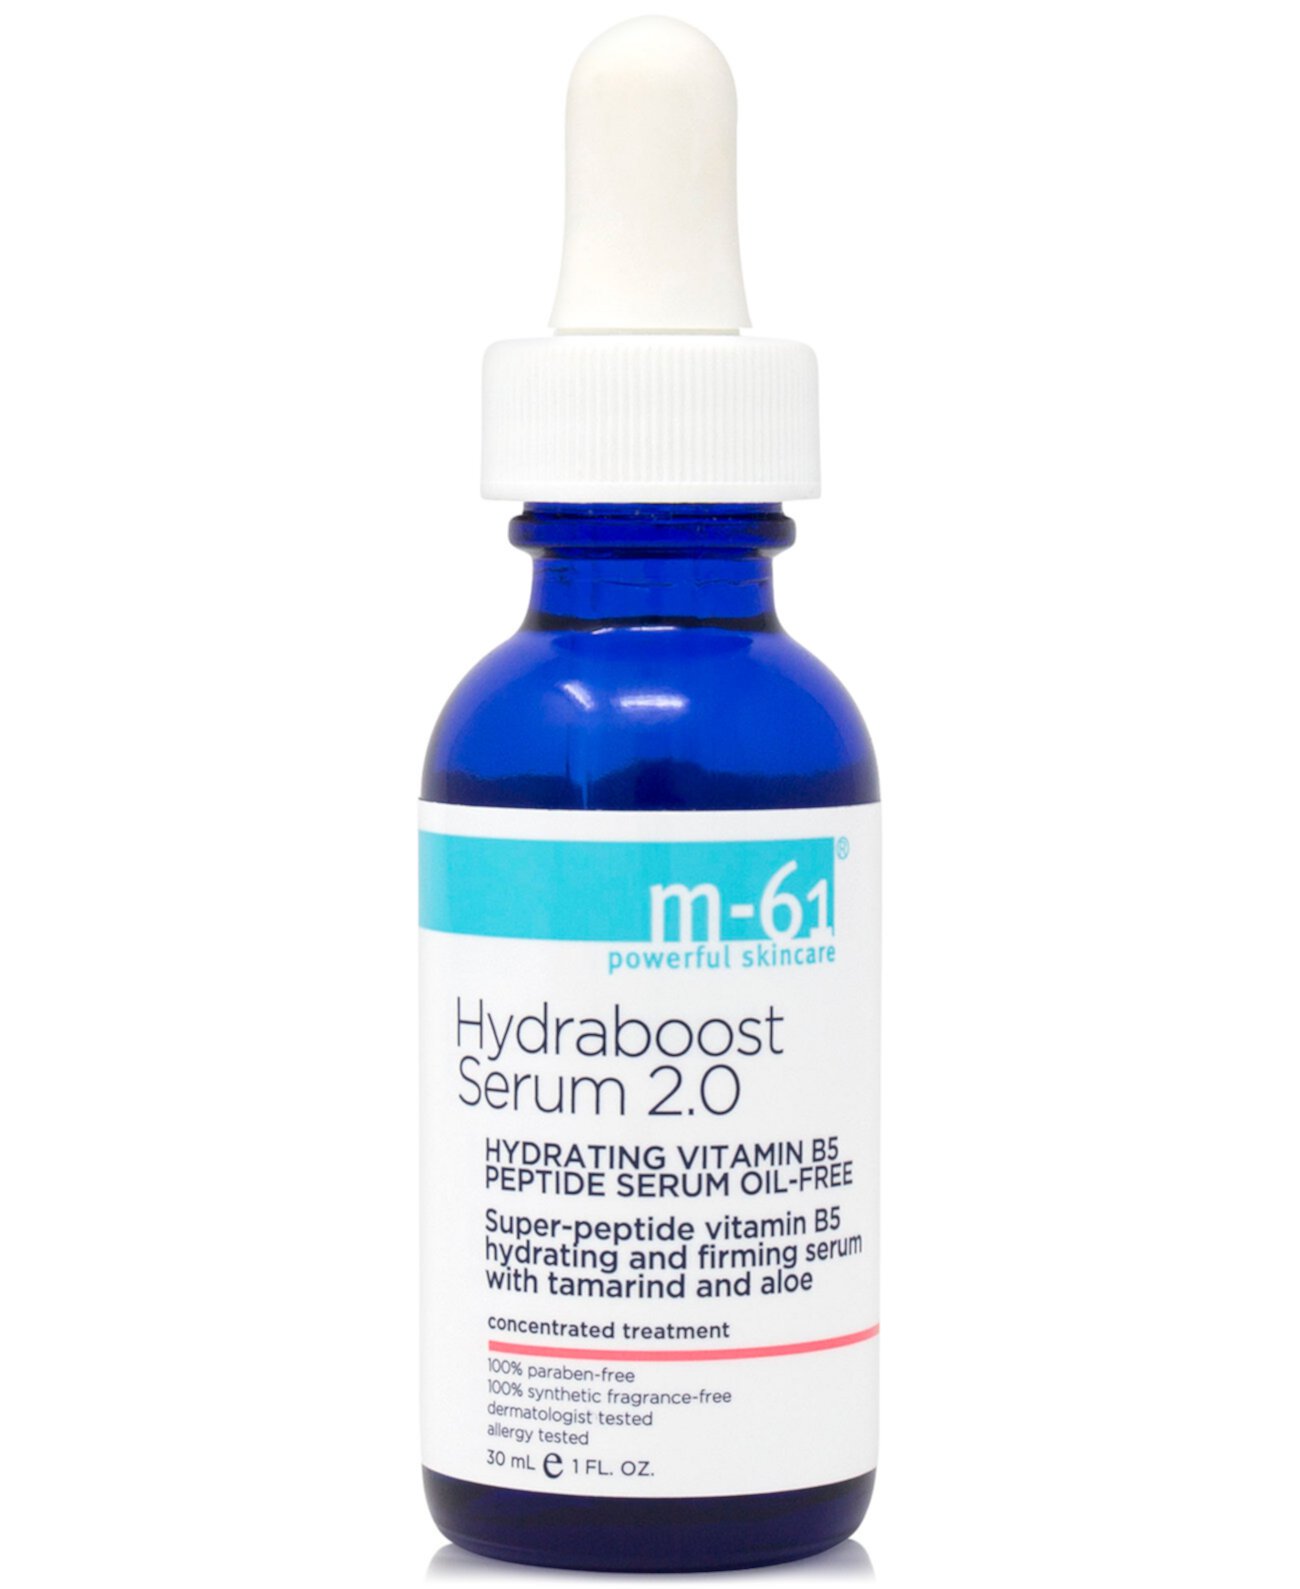 Сыворотка Hydraboost 2.0, 1 унция. M-61 by Bluemercury